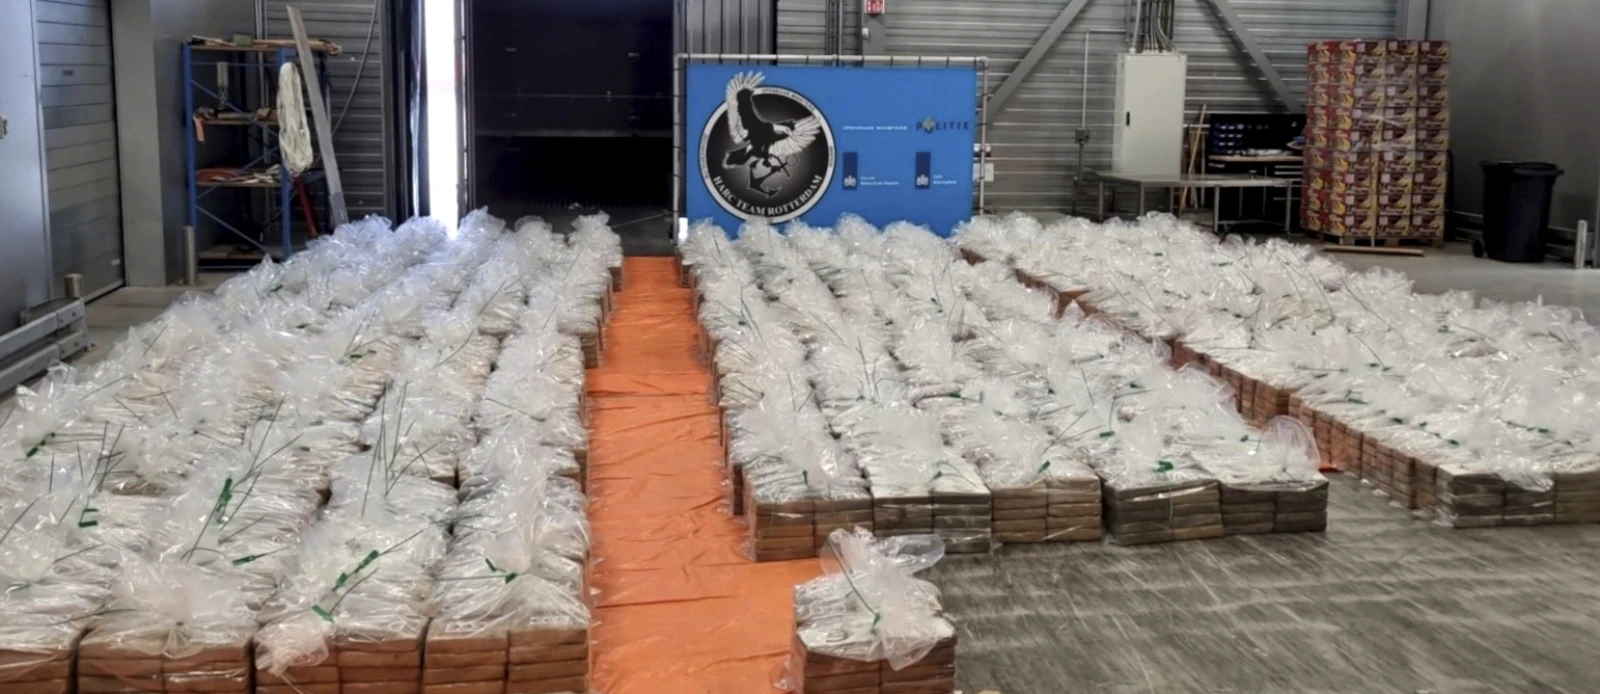 Security in Ecuador Has Come Undone as Drug Cartels Exploit the Banana Industry to Ship Cocaine